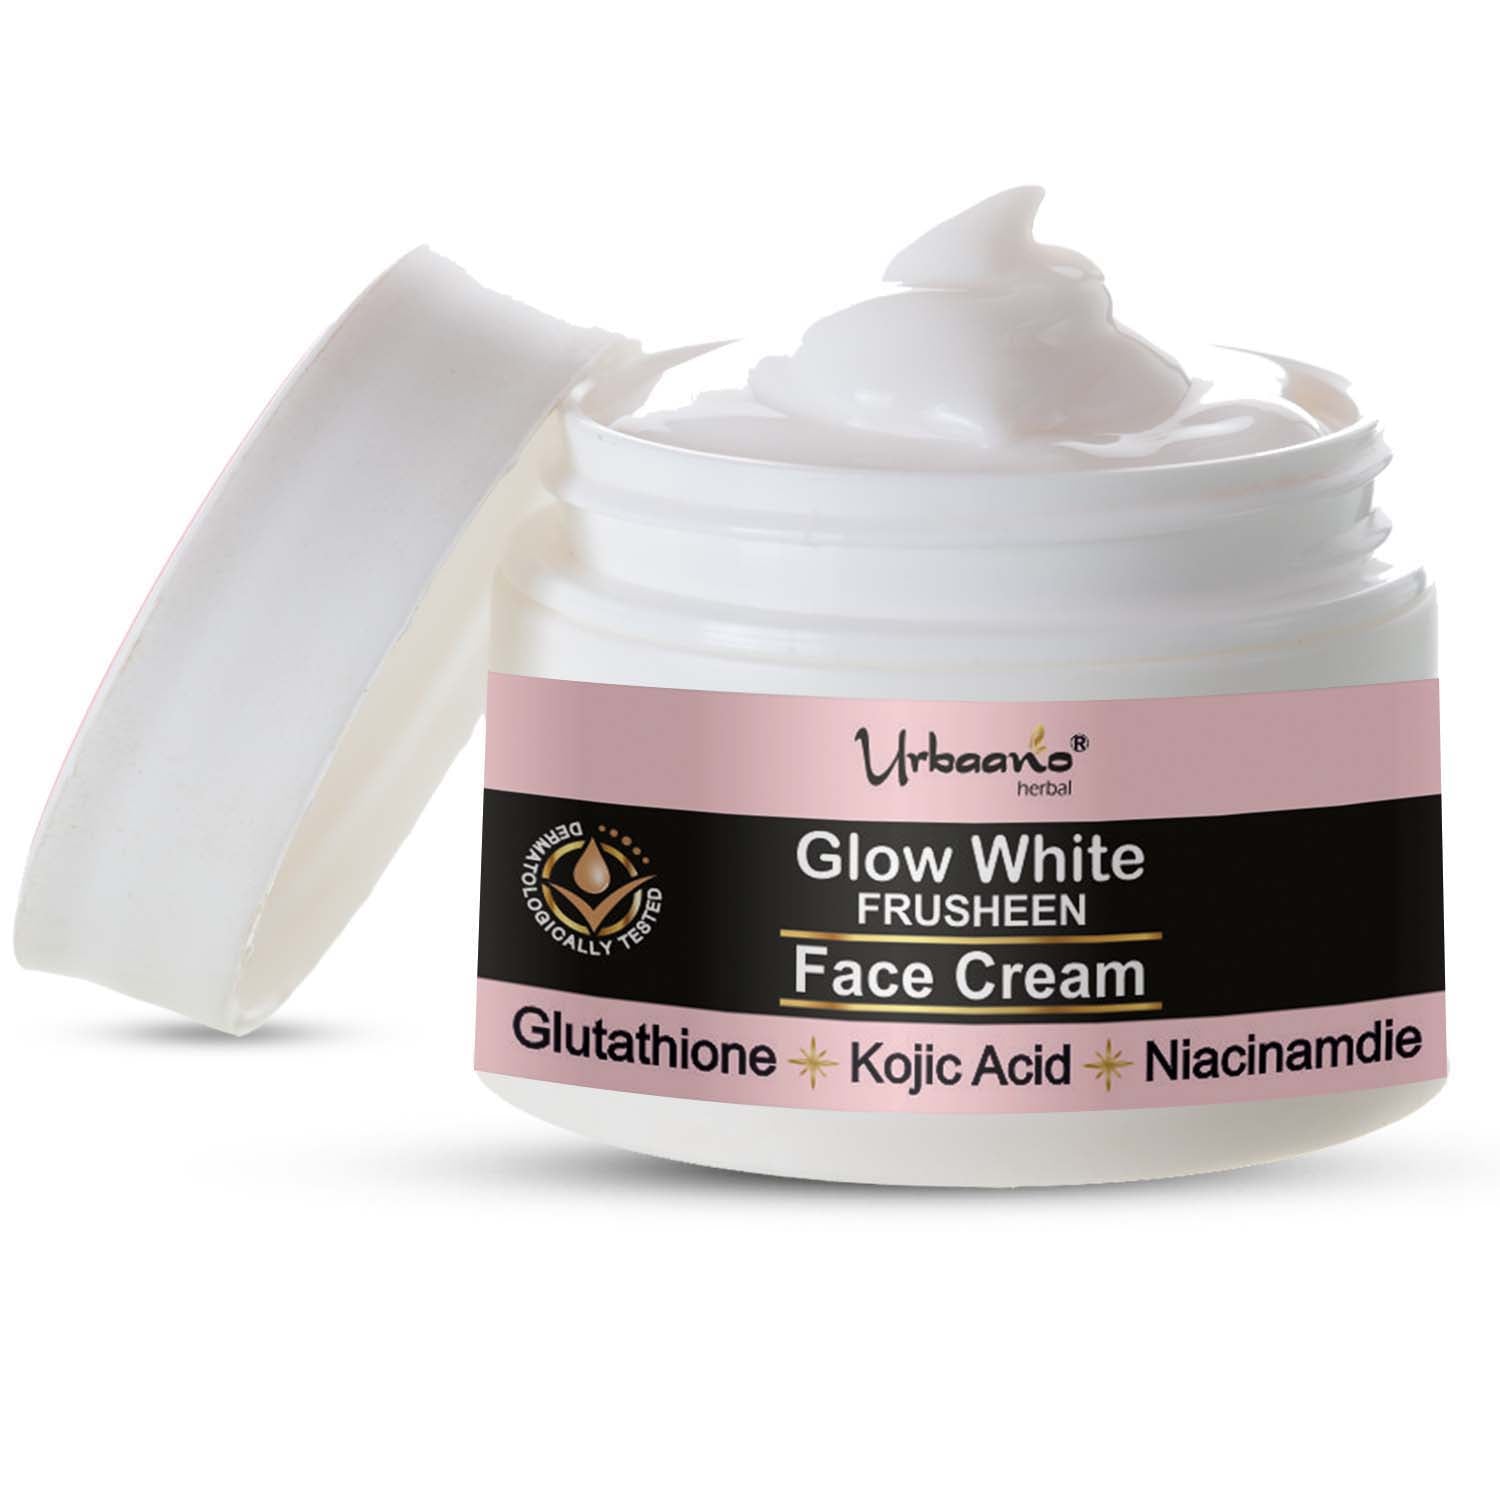 urbaano herbal frusheen glow white face cream with glutathione, kojic acid, niacinamide